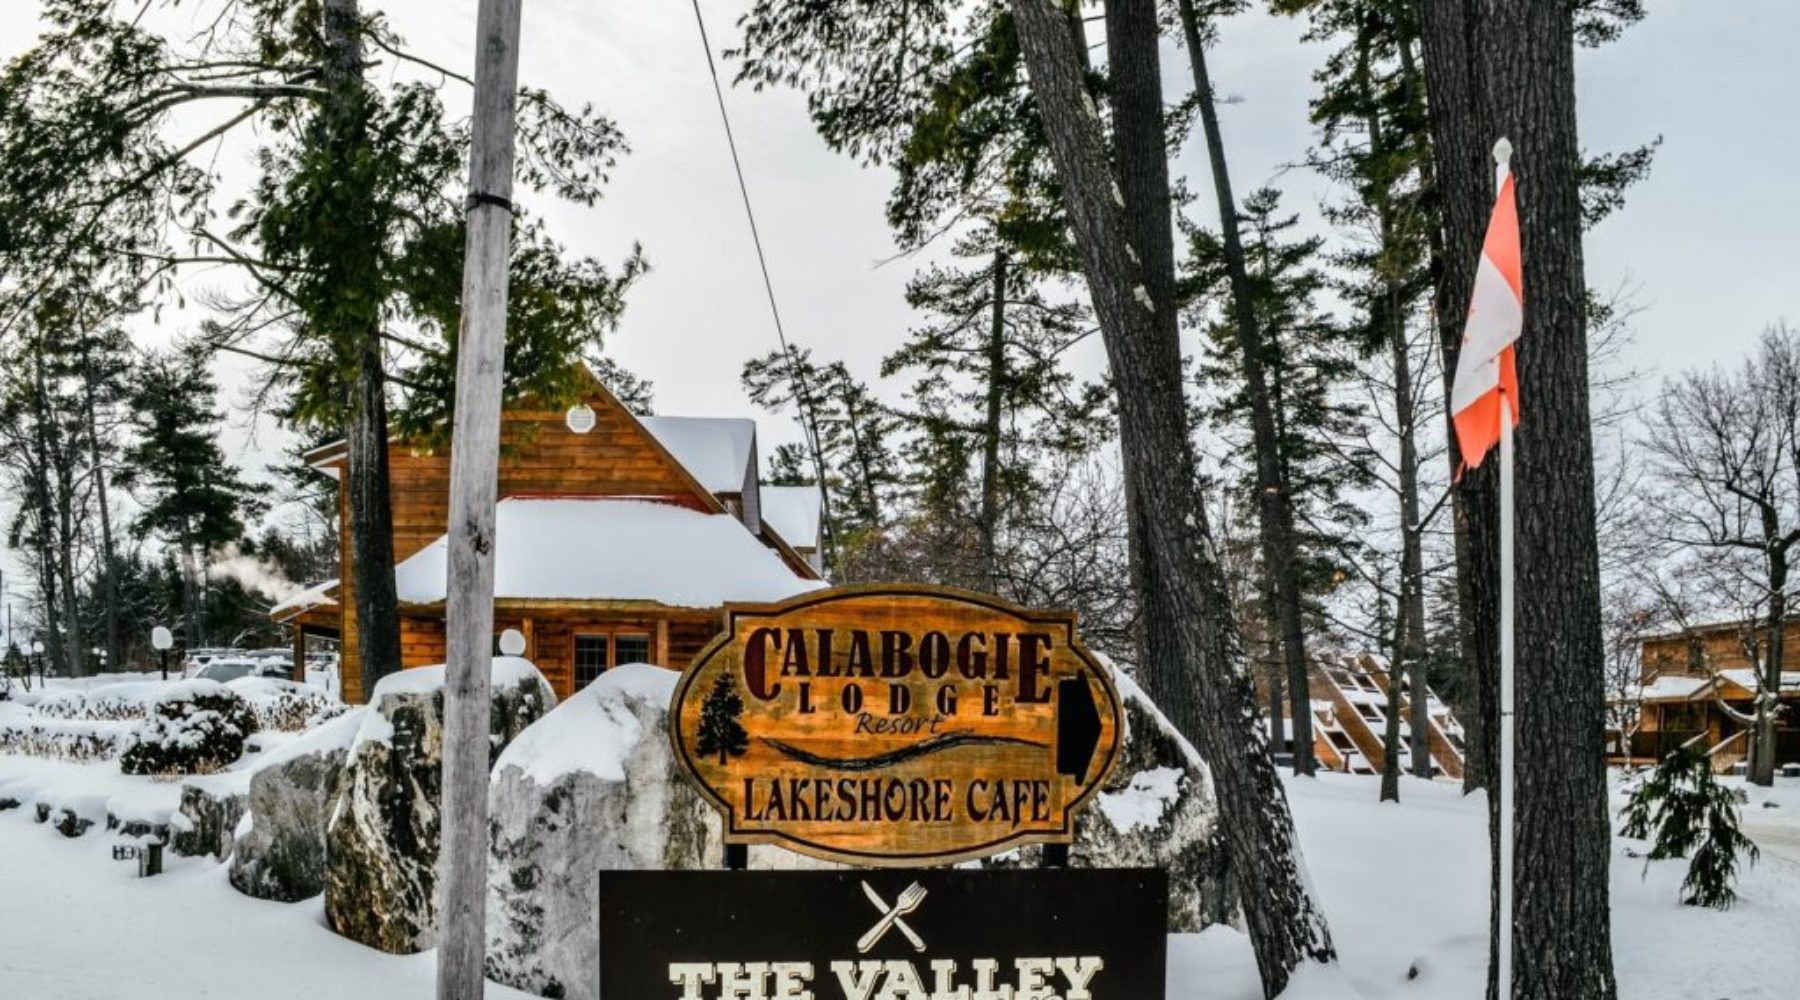 Calabogie Lodge resort